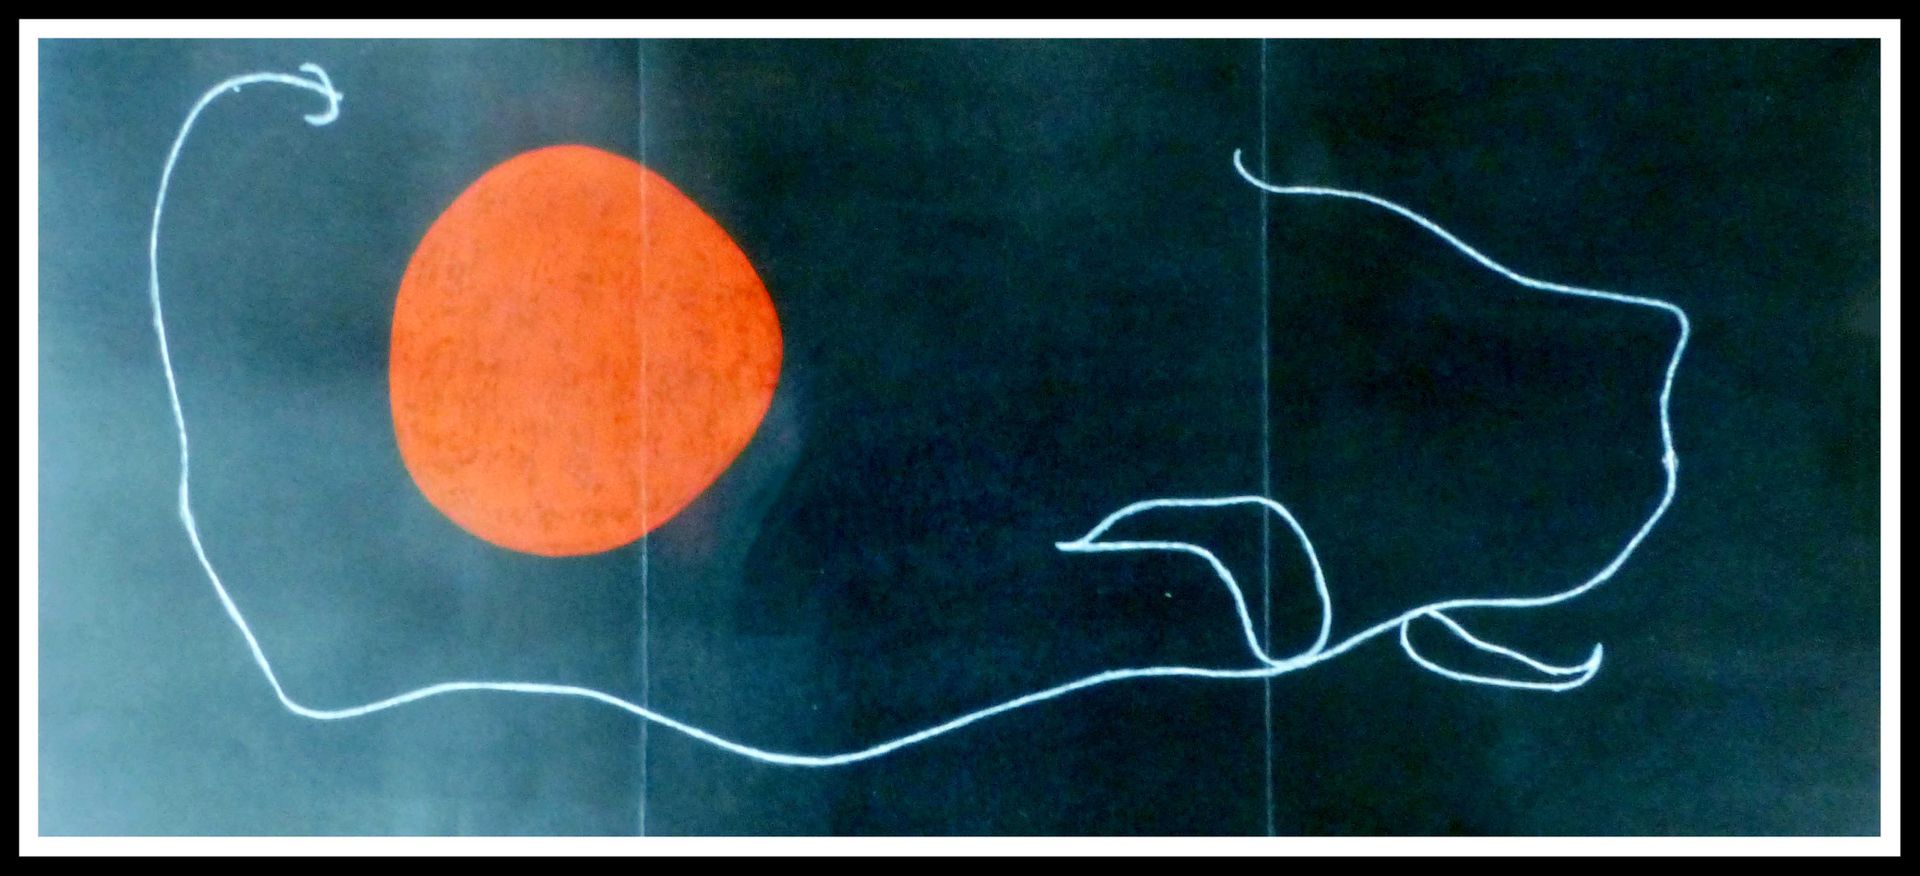 Joan Miro 琼-米罗 (1893 - 1983)

黑色背景上的红色污点组成

1961

原始石版画

印数：未知

无符号工作

尺寸：56 x 3&hellip;